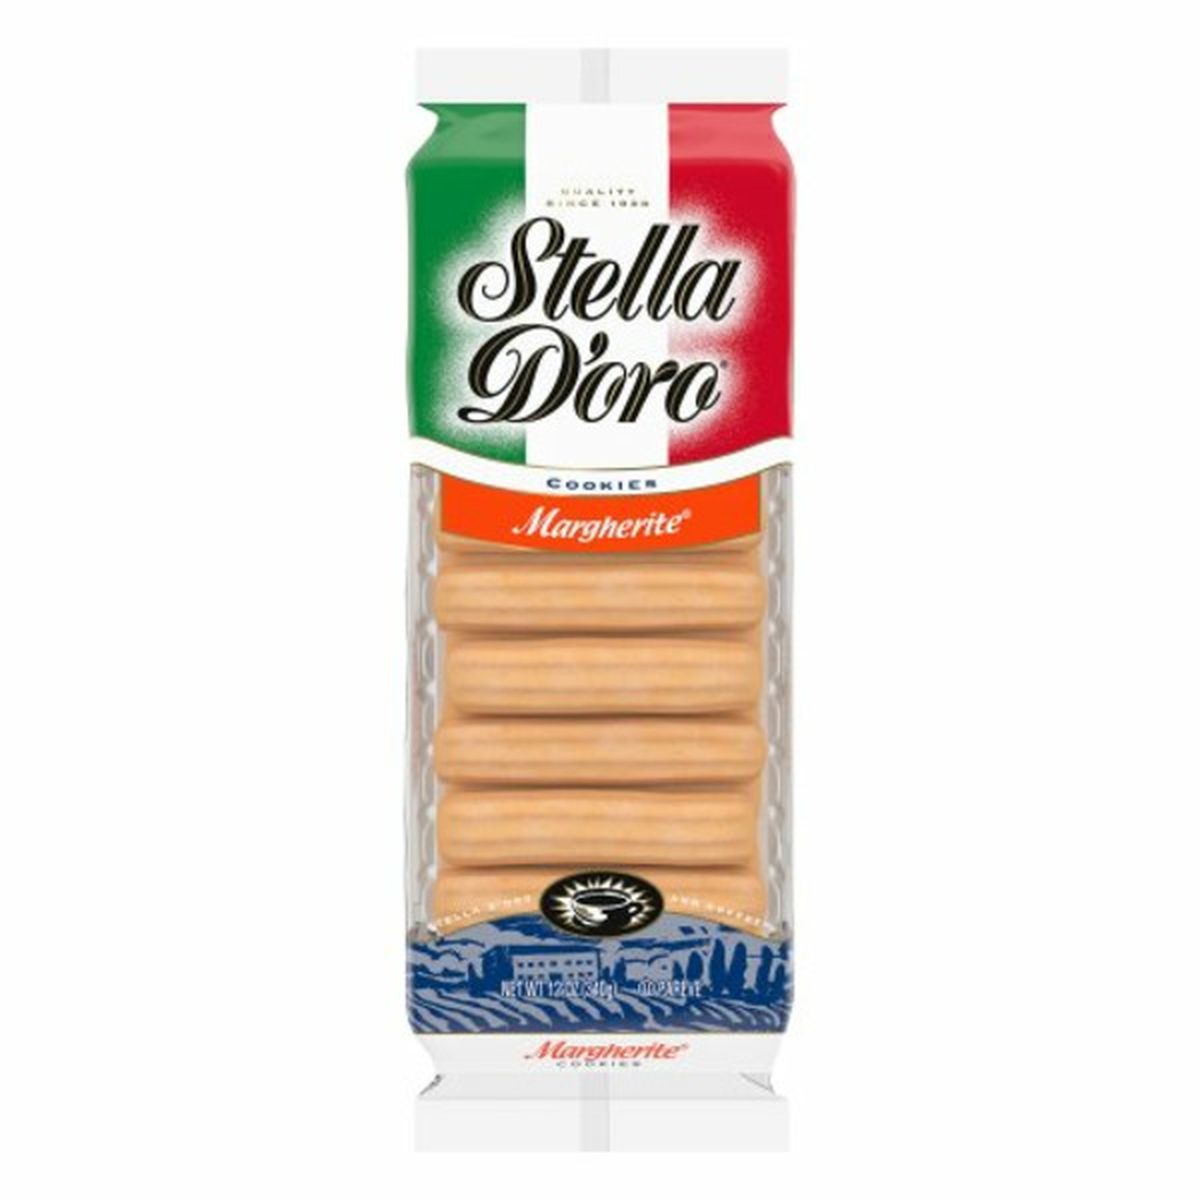 Calories in Stella D'oros Cookies, Margherite